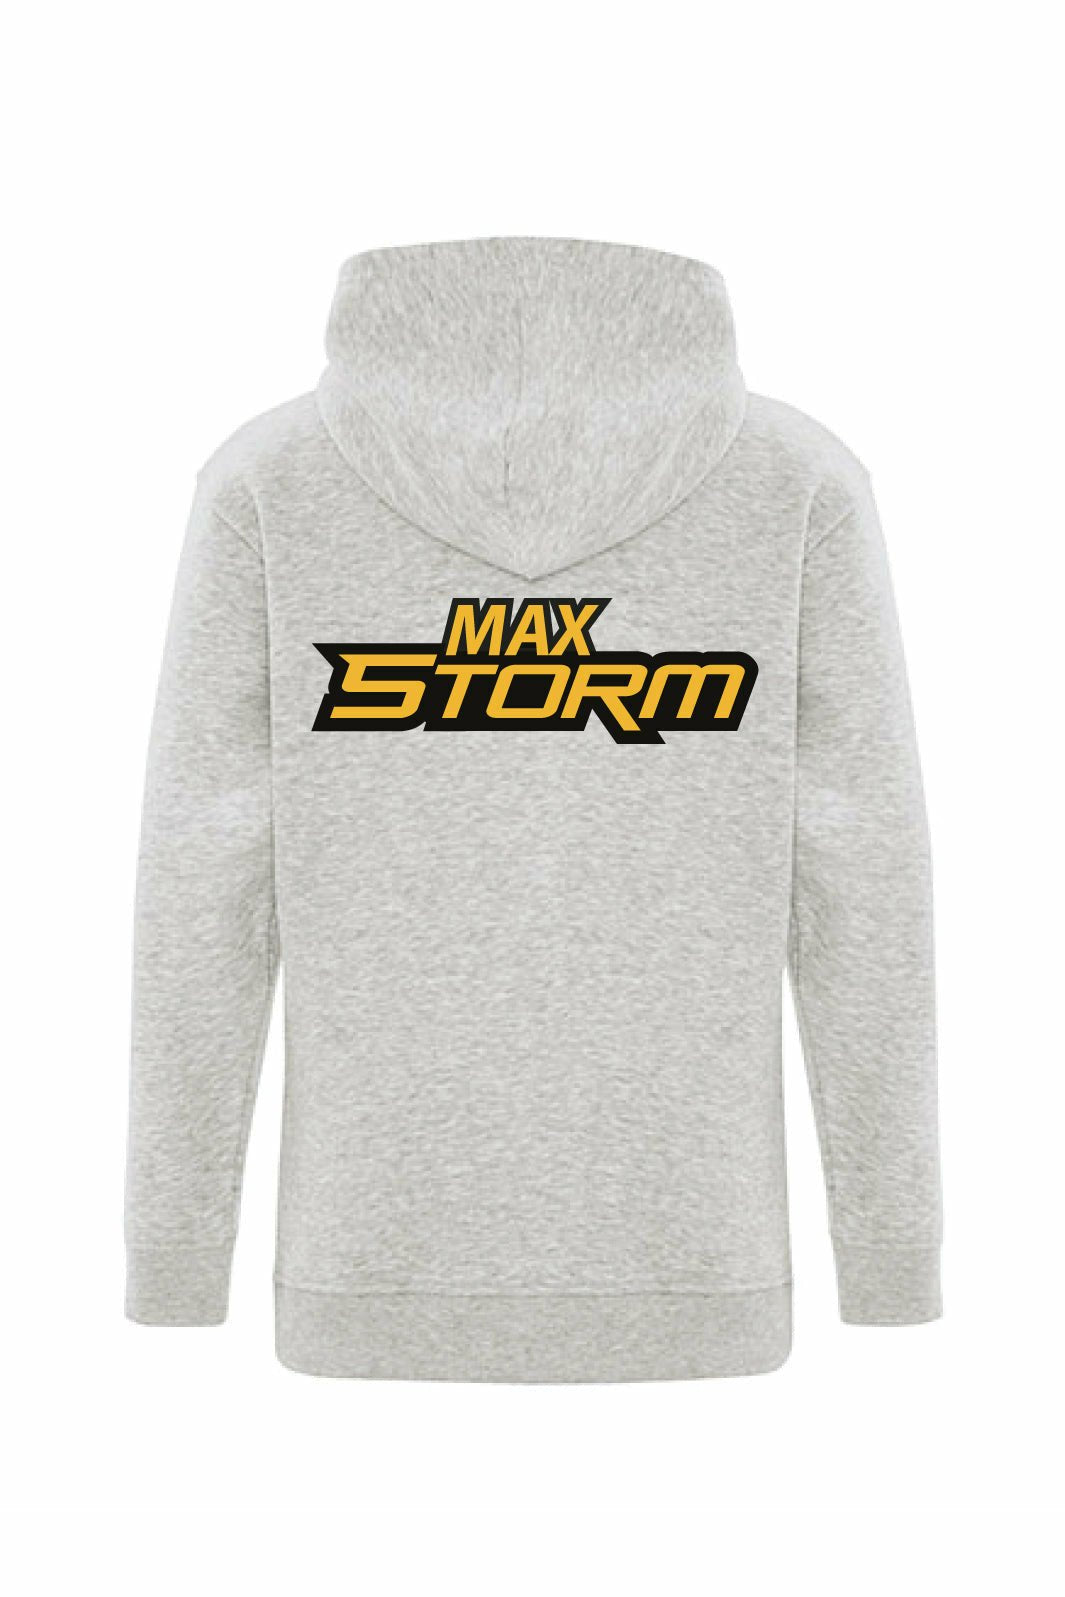 Max Storm Hooded Sweatshirt - Oddball Workshop